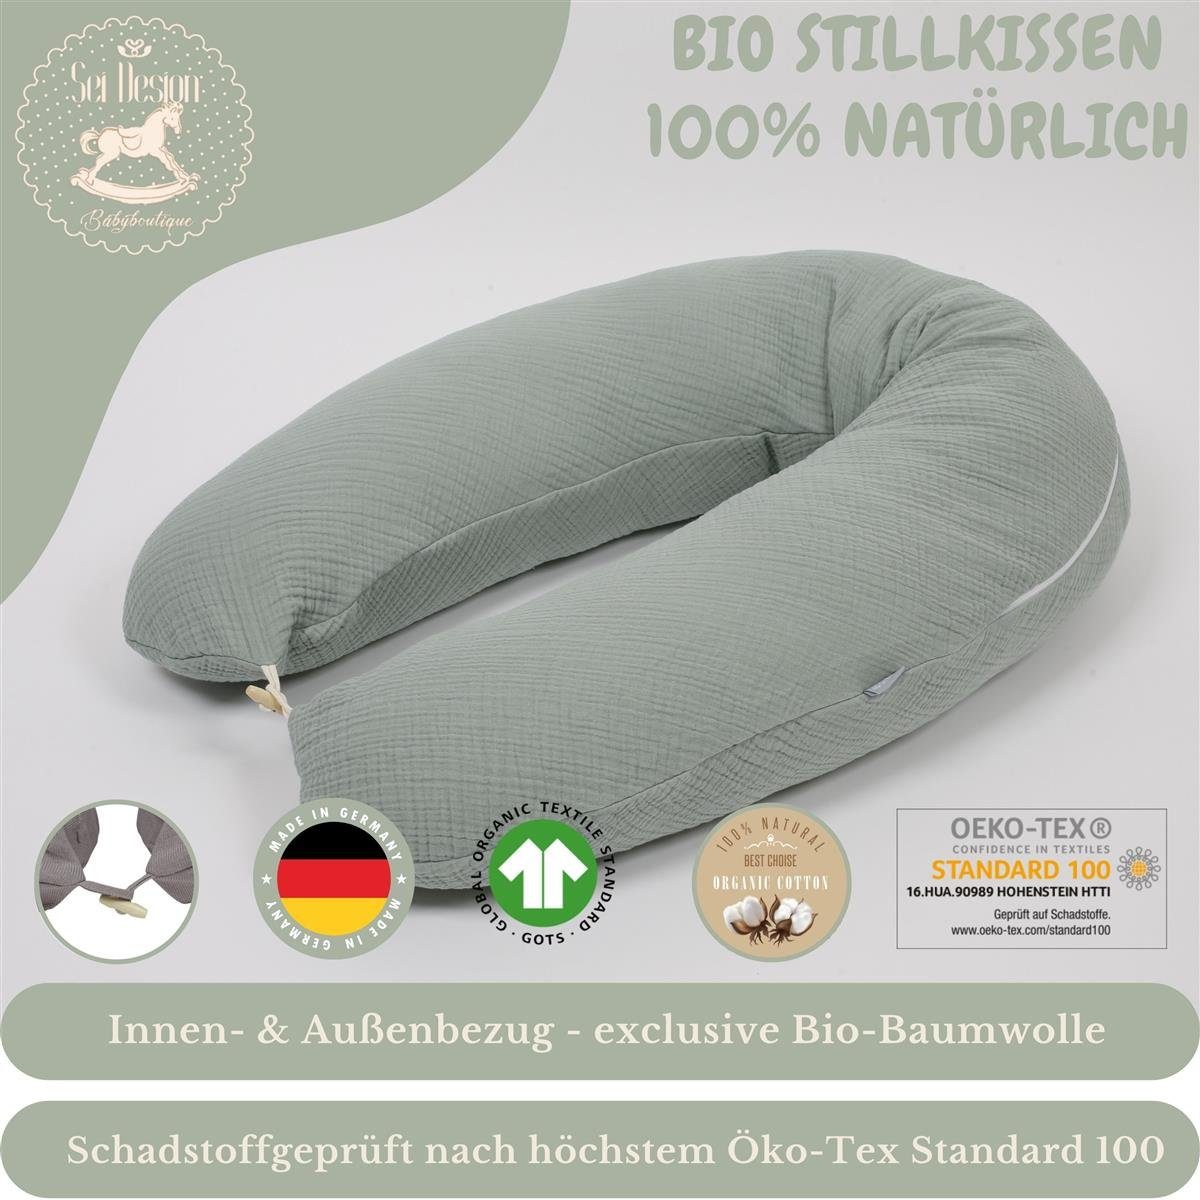 Kapok Mint Stillkissen + + Design 190x30 SEI cm, Naturstillkissen Baumwolle BIO-Stillkissen Dark Bezug, BIO Kissen